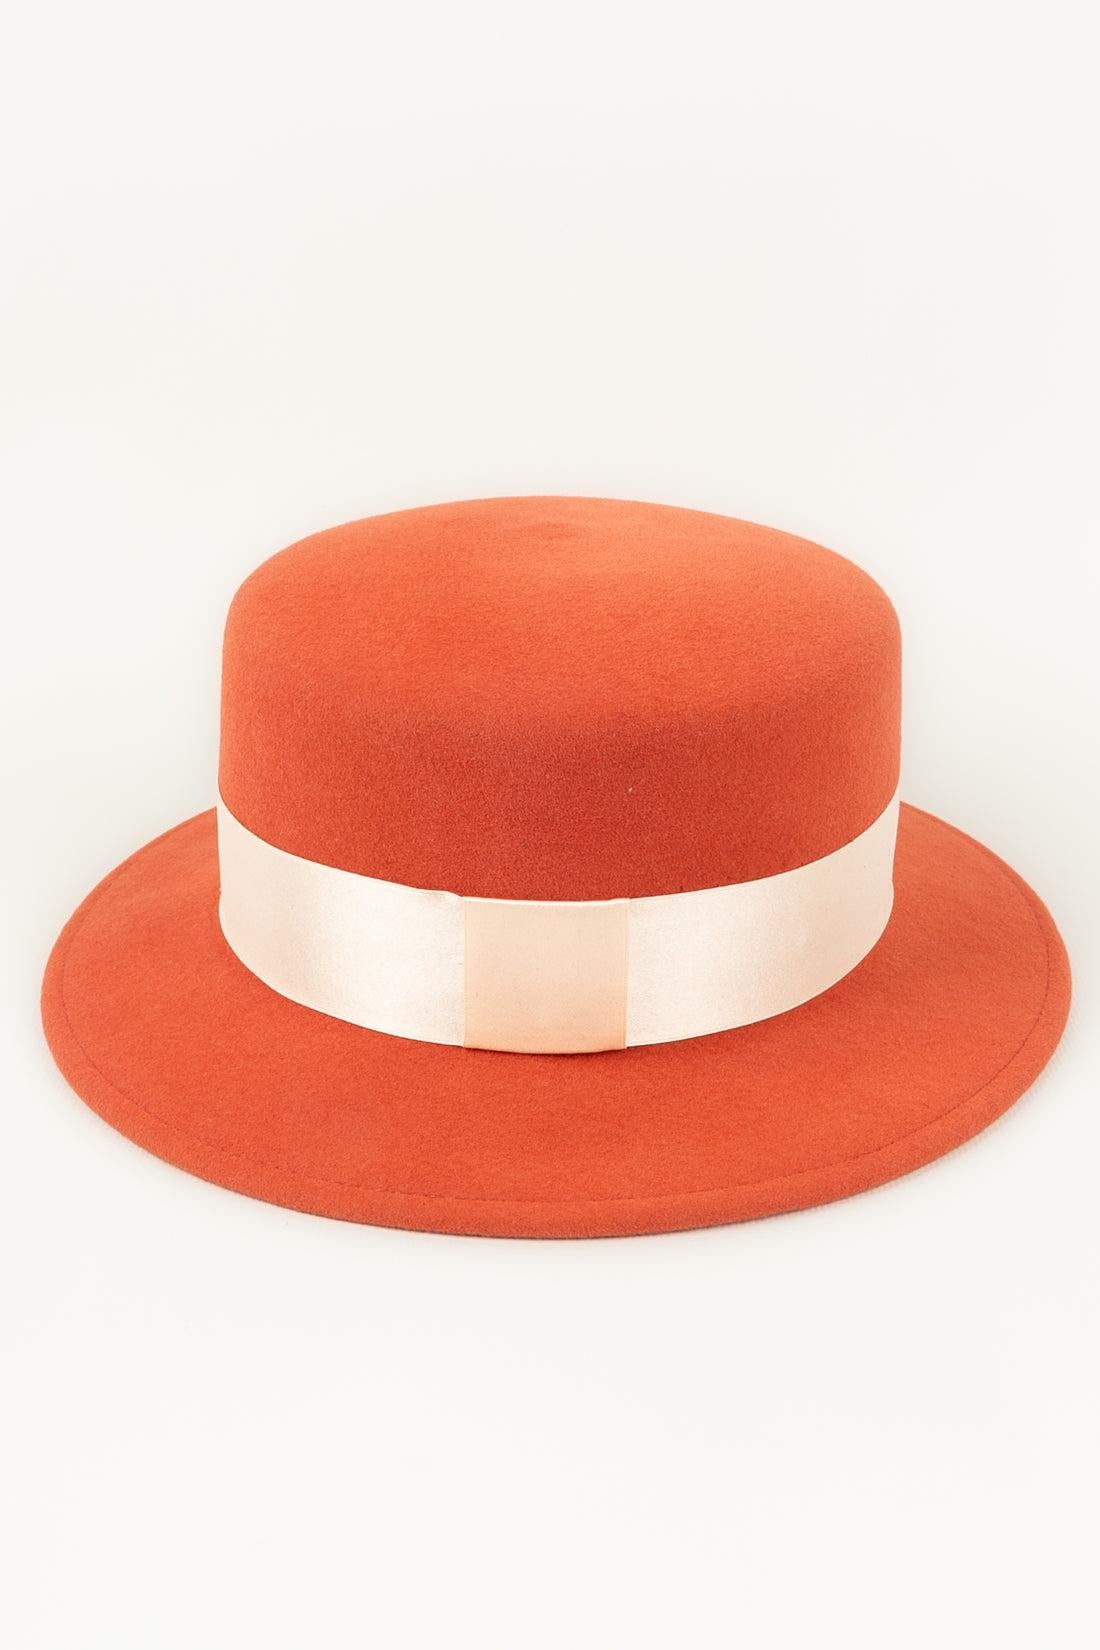 Maison Michel Felt Hat in Orange/Brick 1